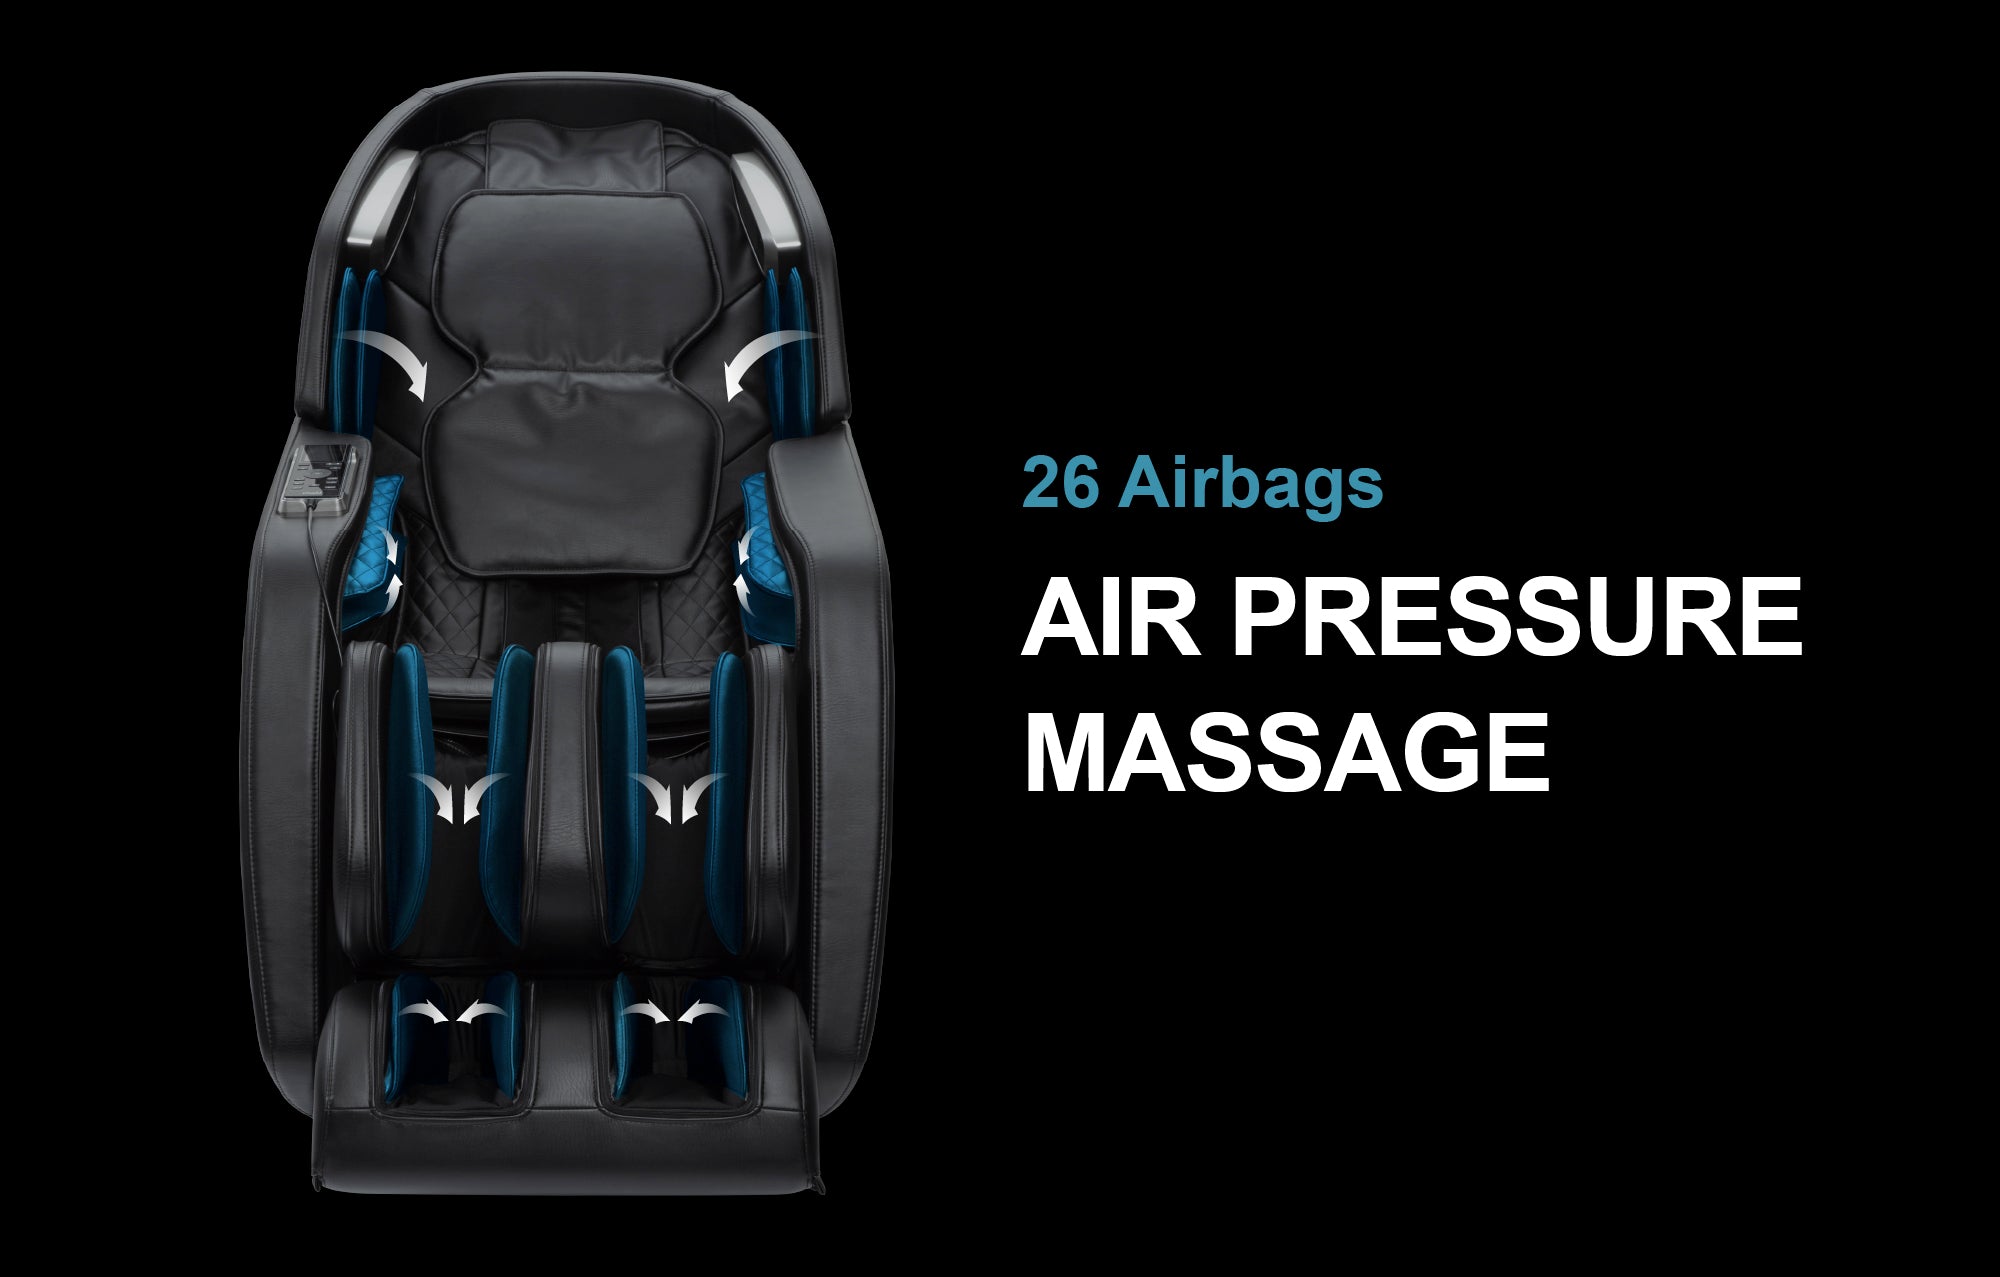 26 Airbags Air Pressure Massage